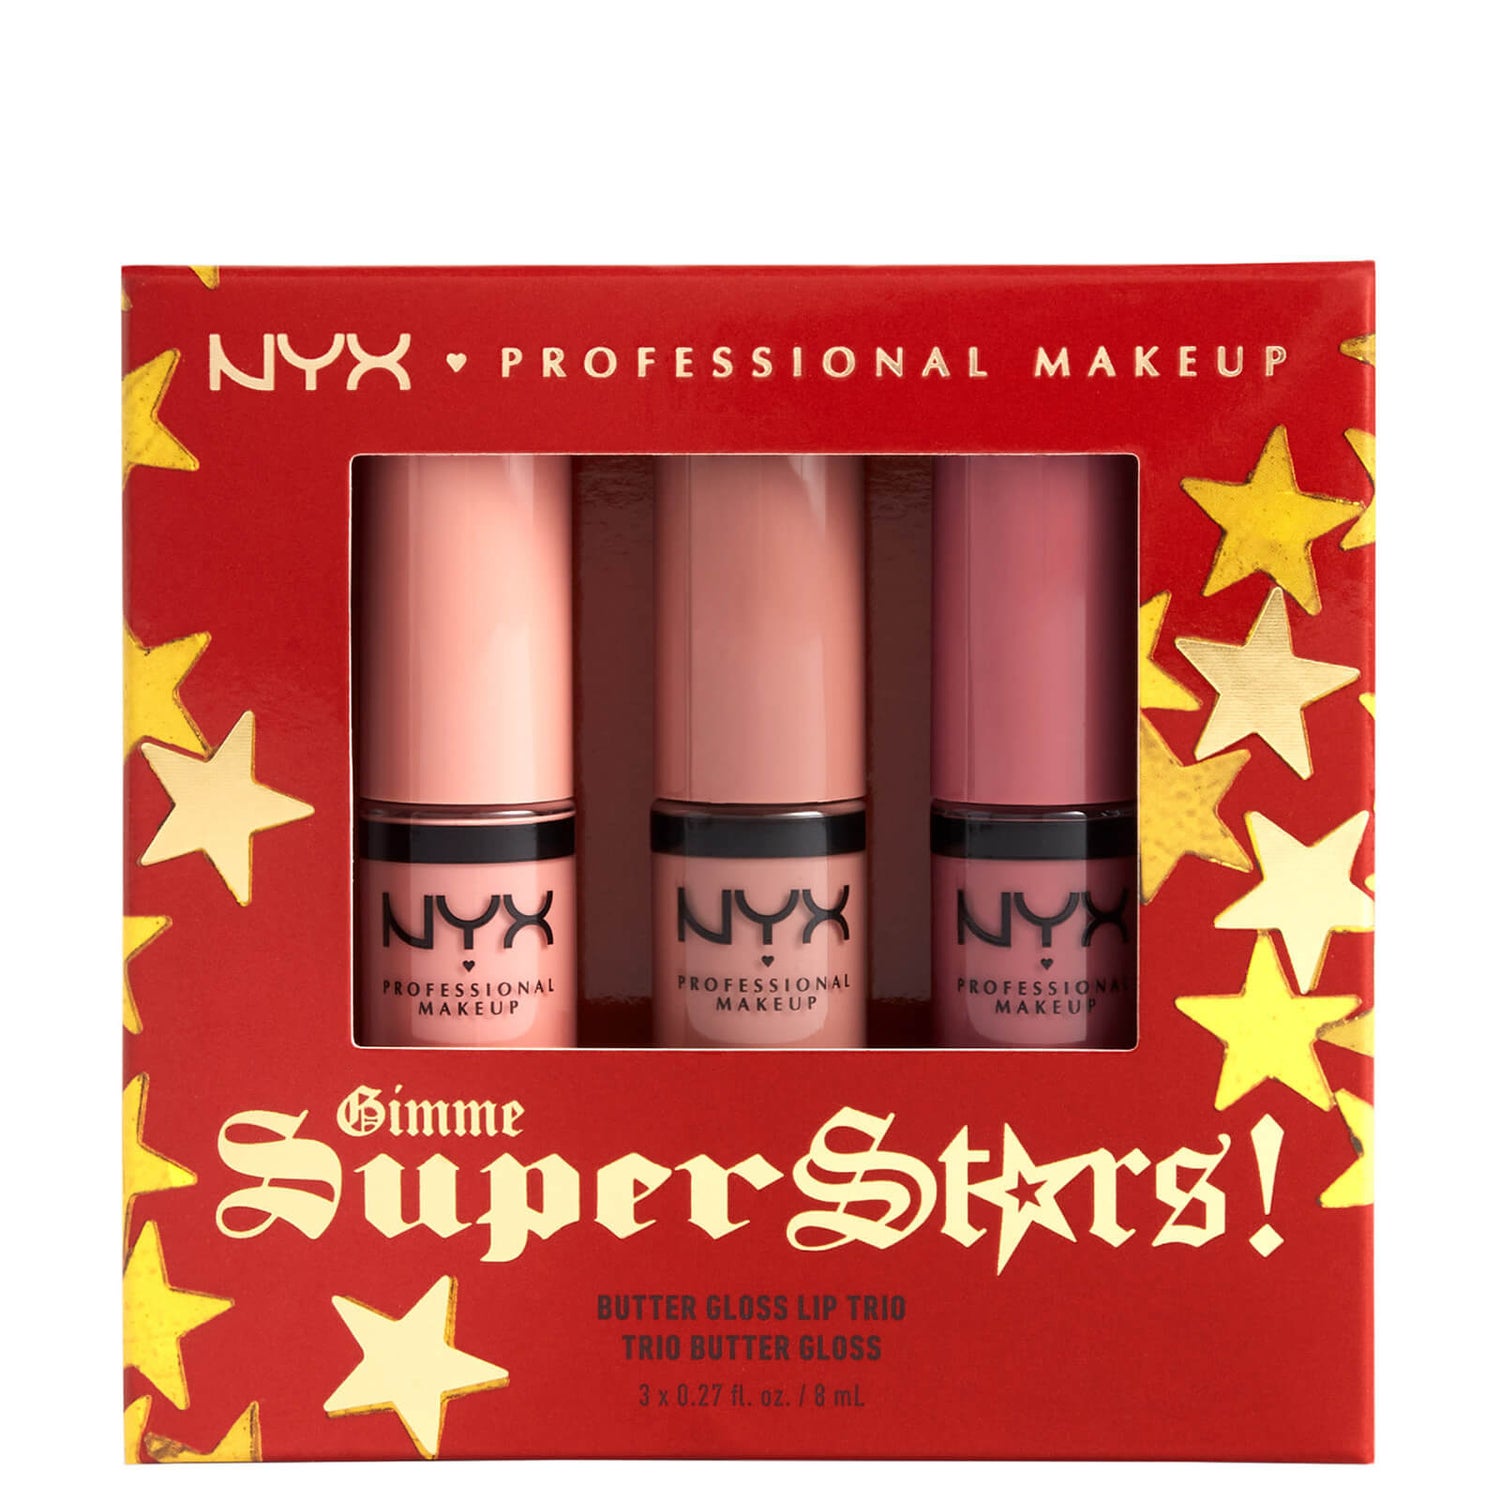 NYX Professionele Make-up Gimme Super Sterren! Butter Gloss Lip Trio Light Nude Gift Set